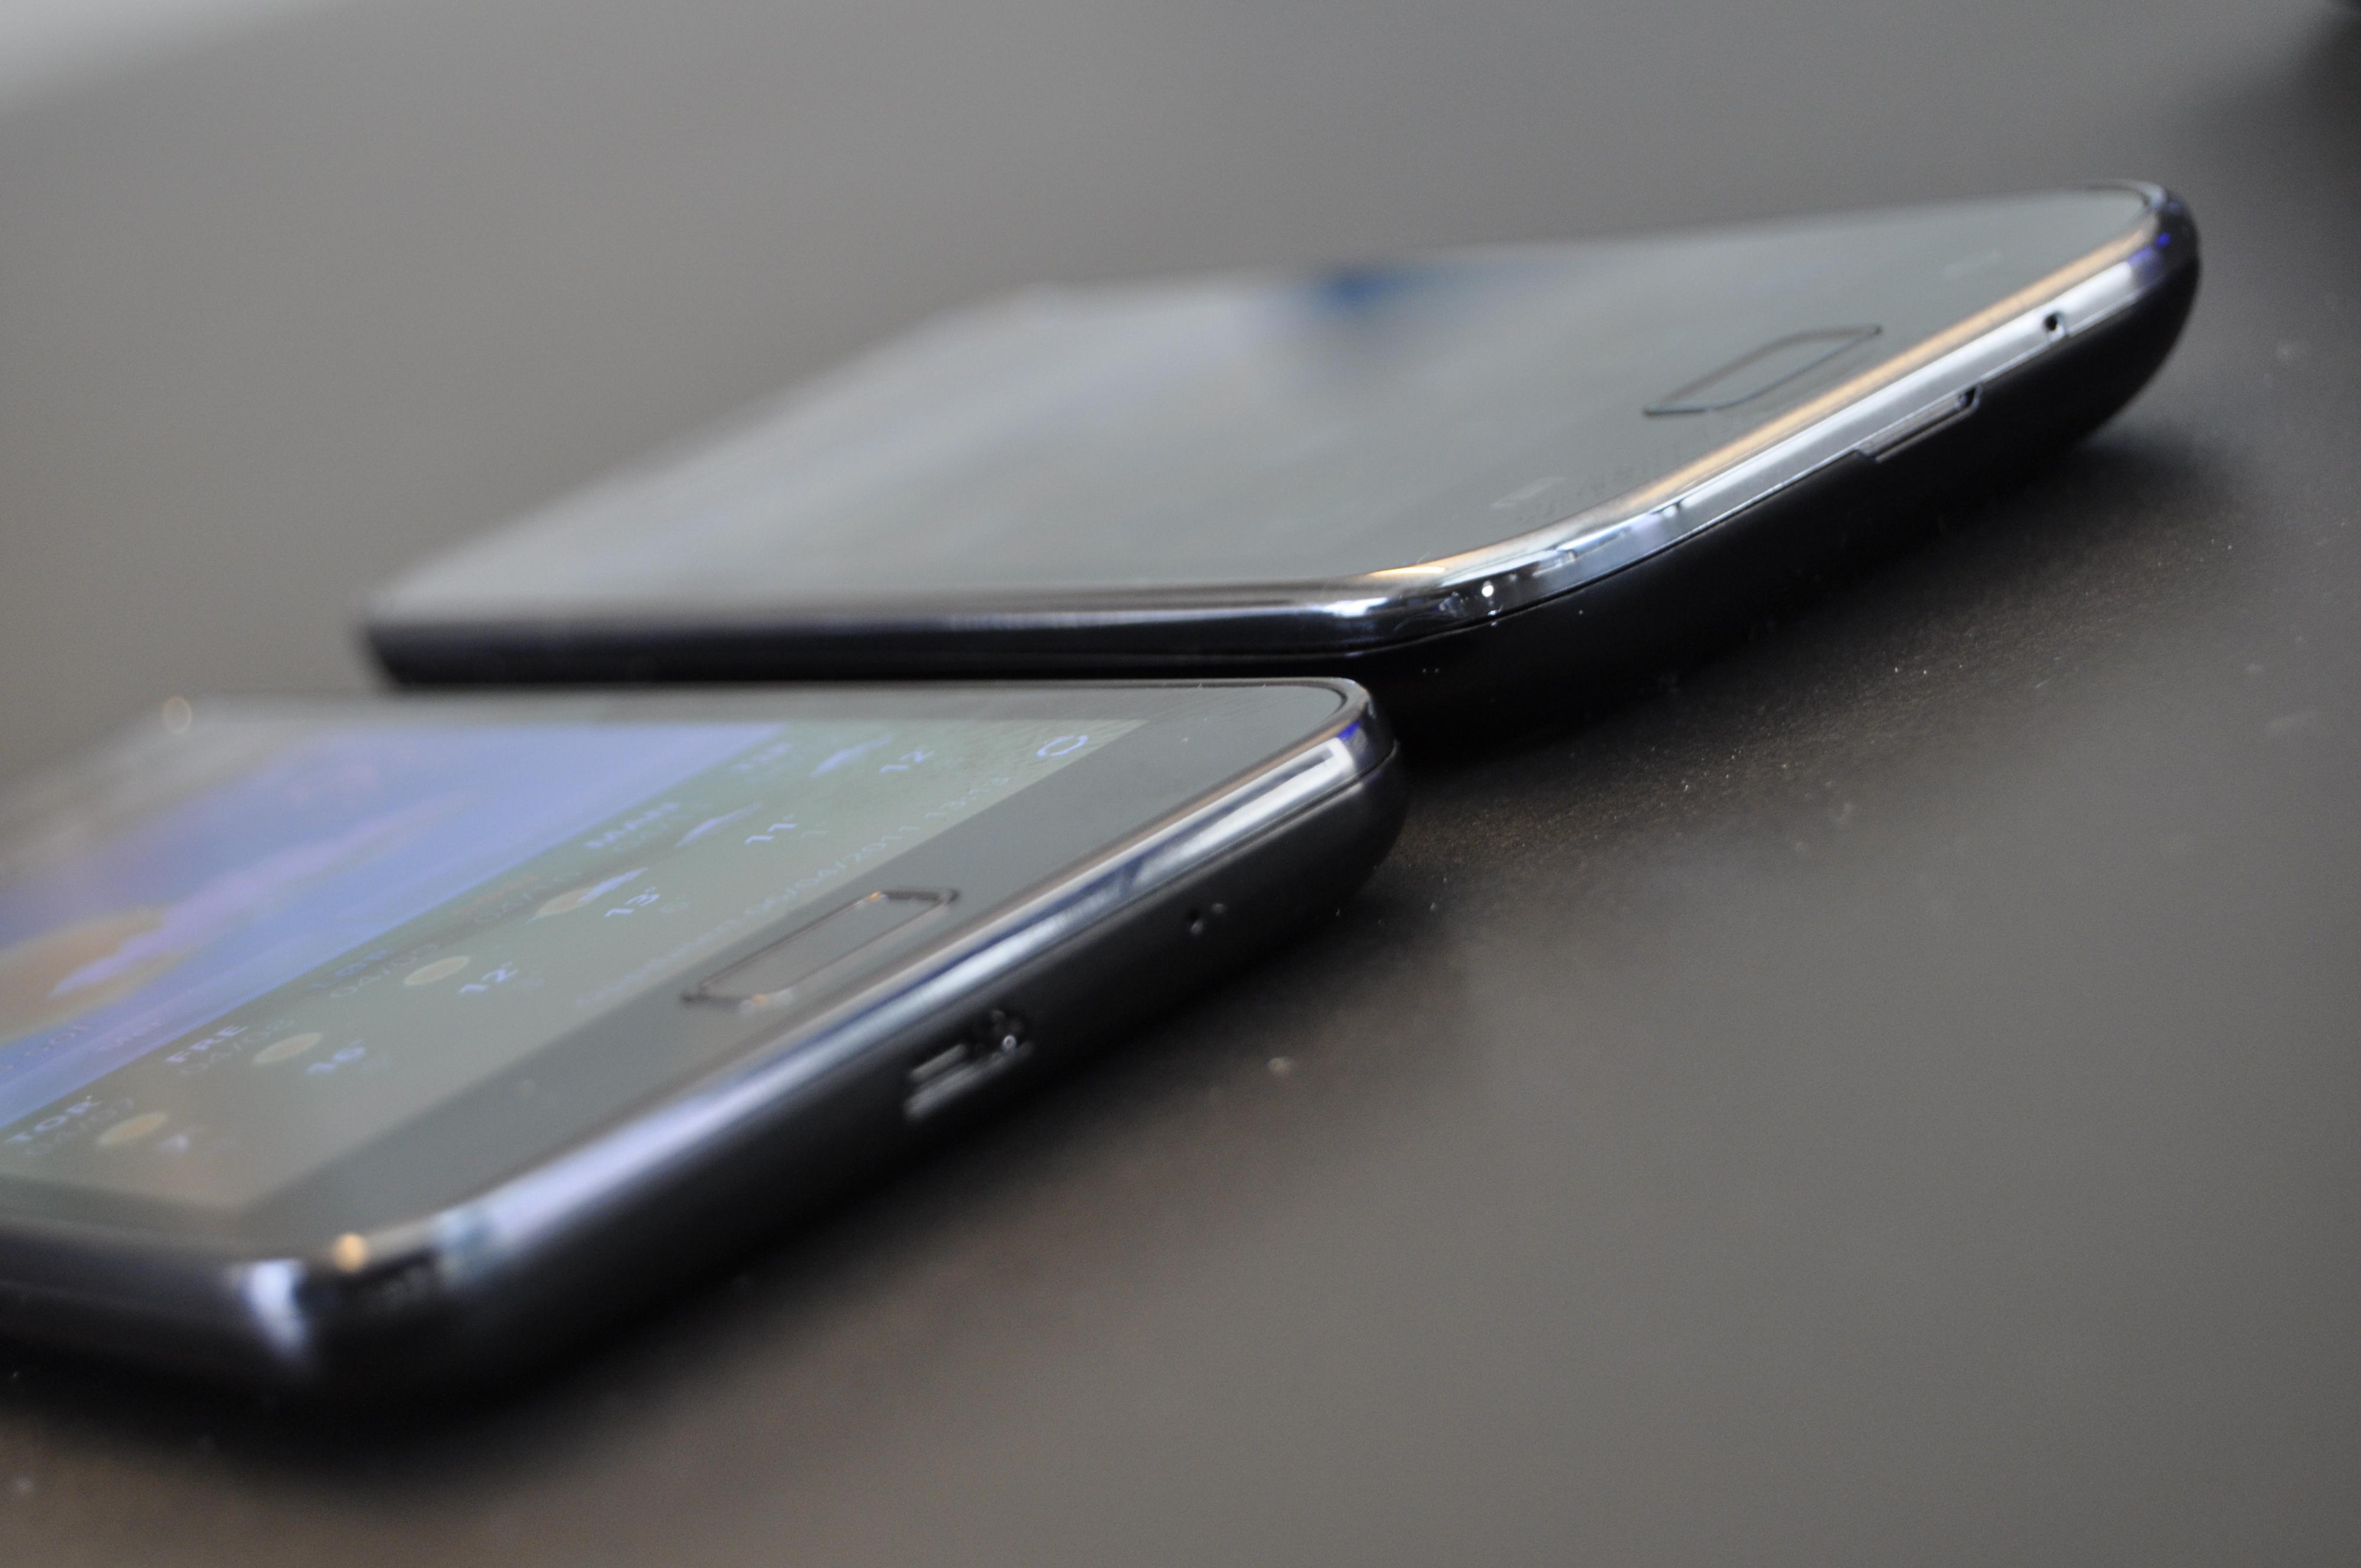 Galaxy S II (til venstre) har blitt tynnere enn Galaxy S.